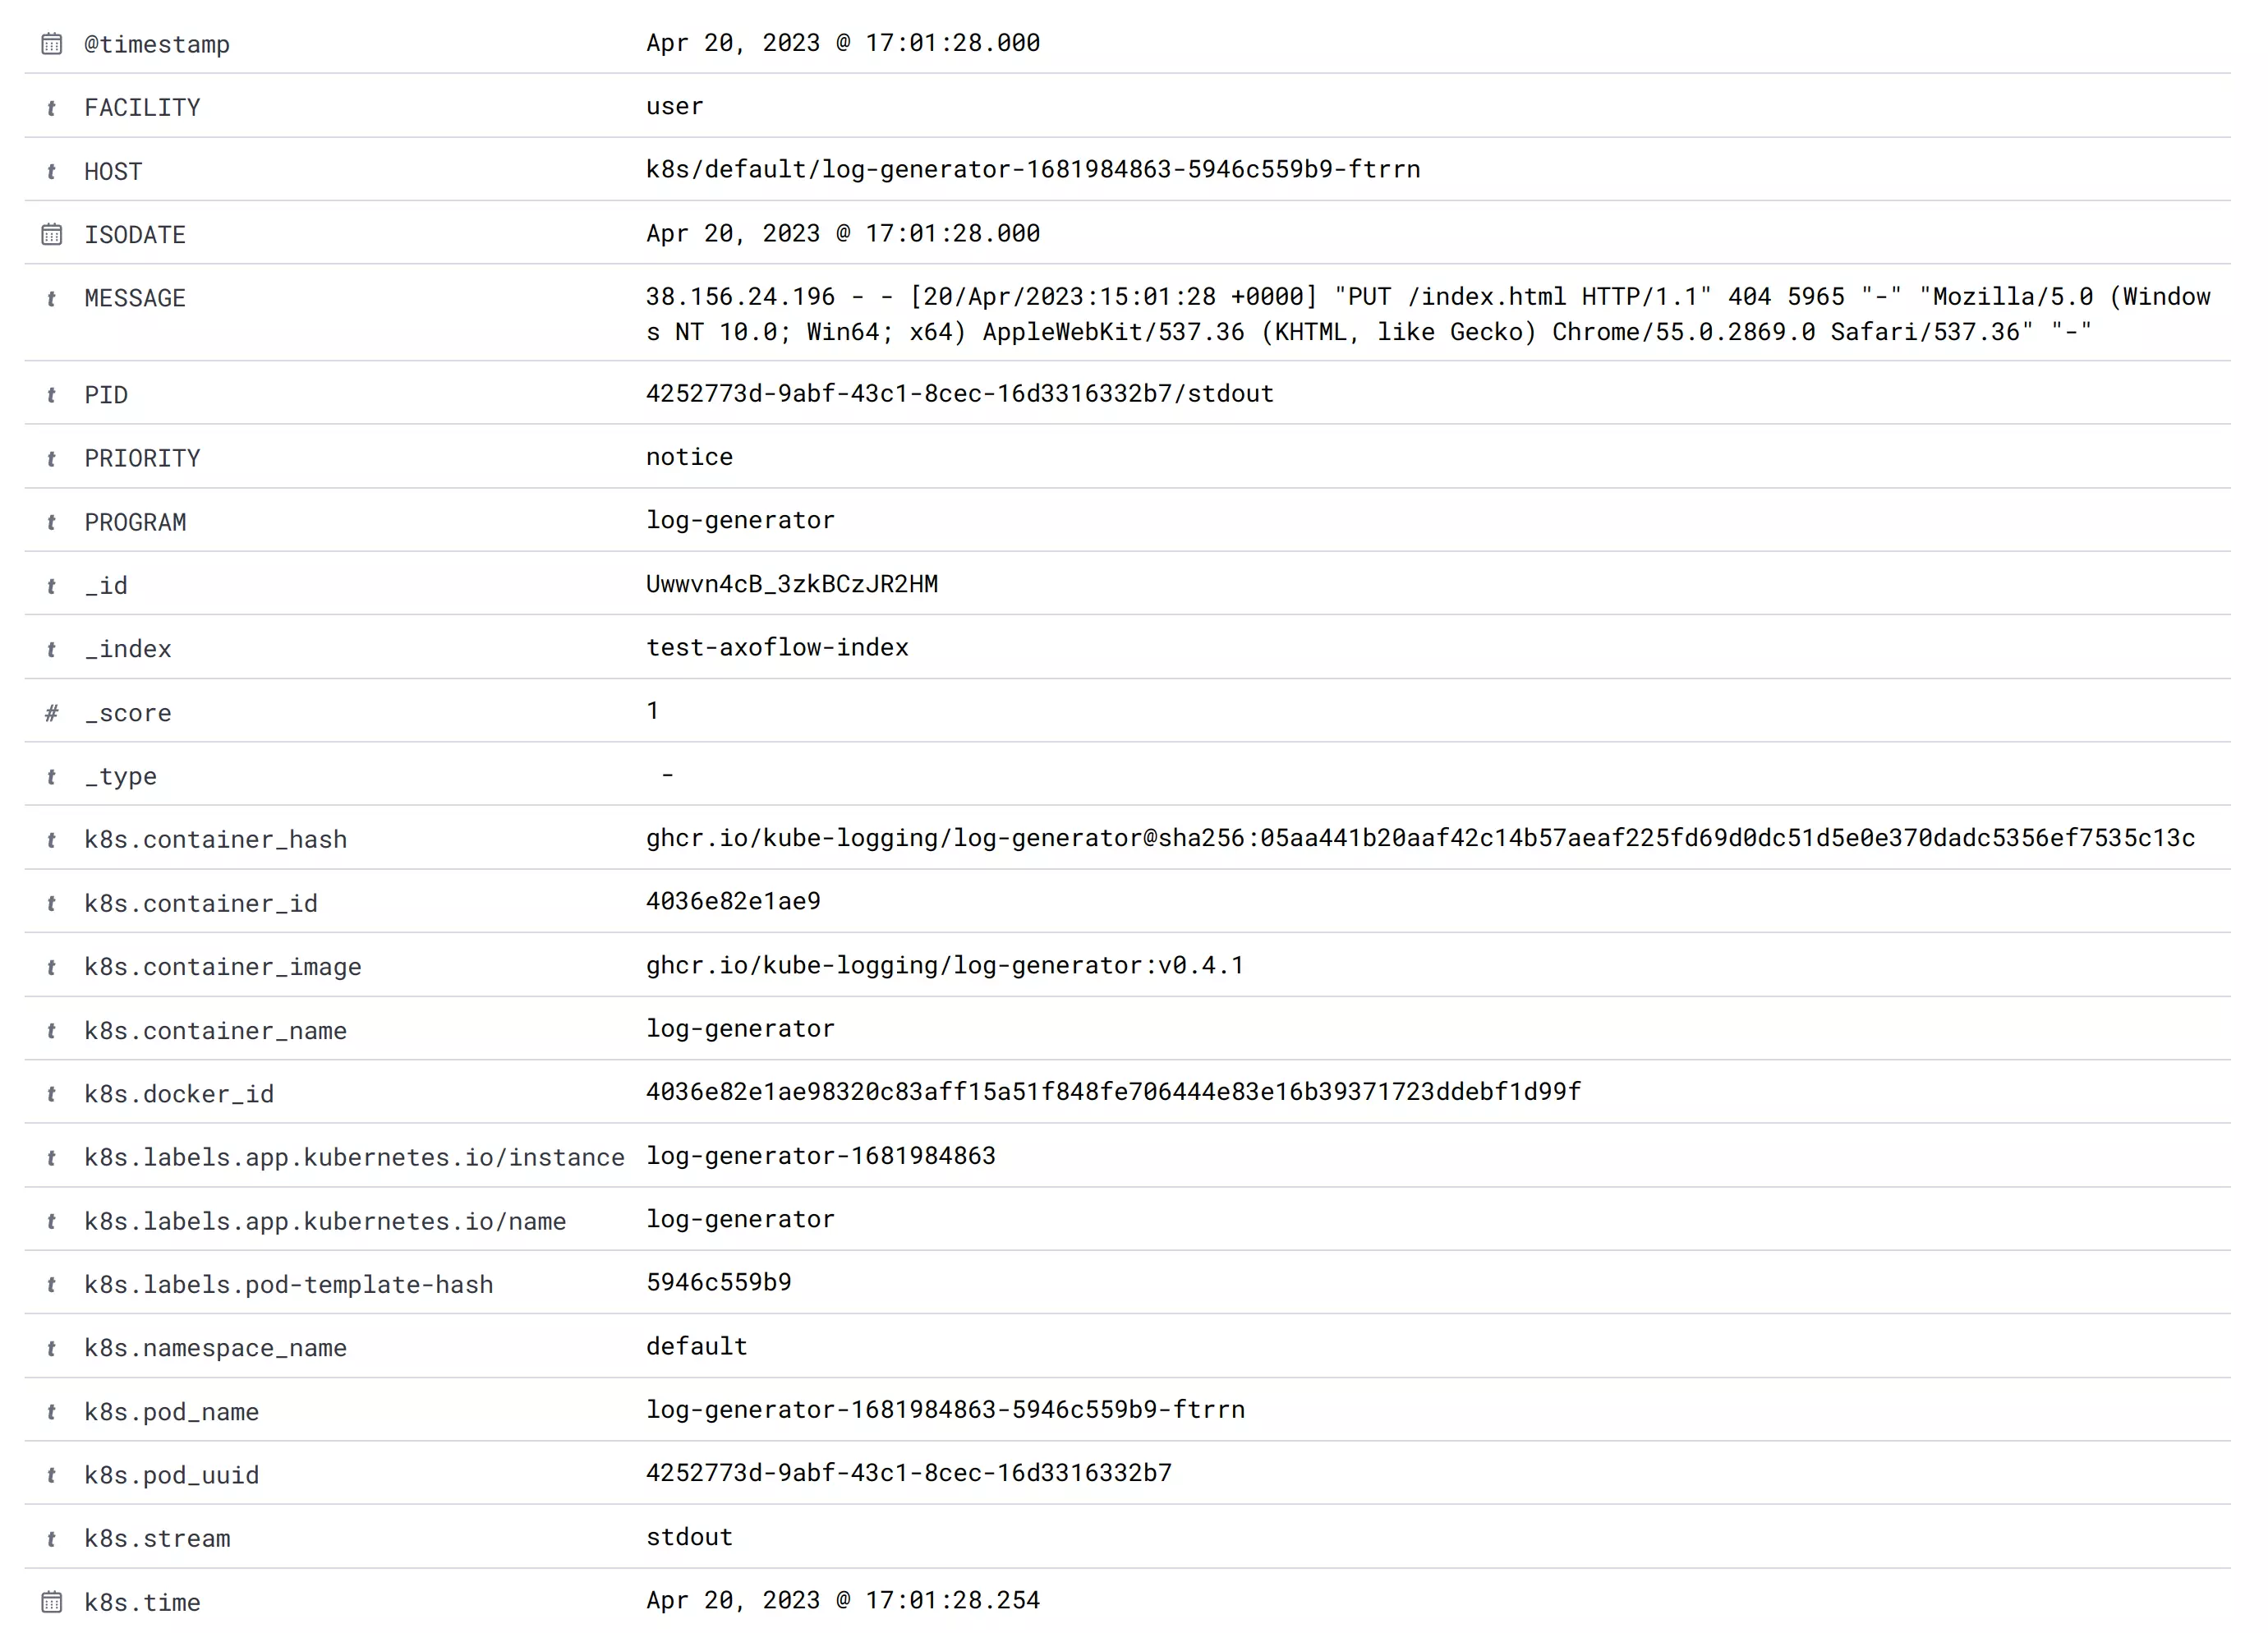 Kubernetes metadata collected with the AxoSyslog syslog-ng distribution